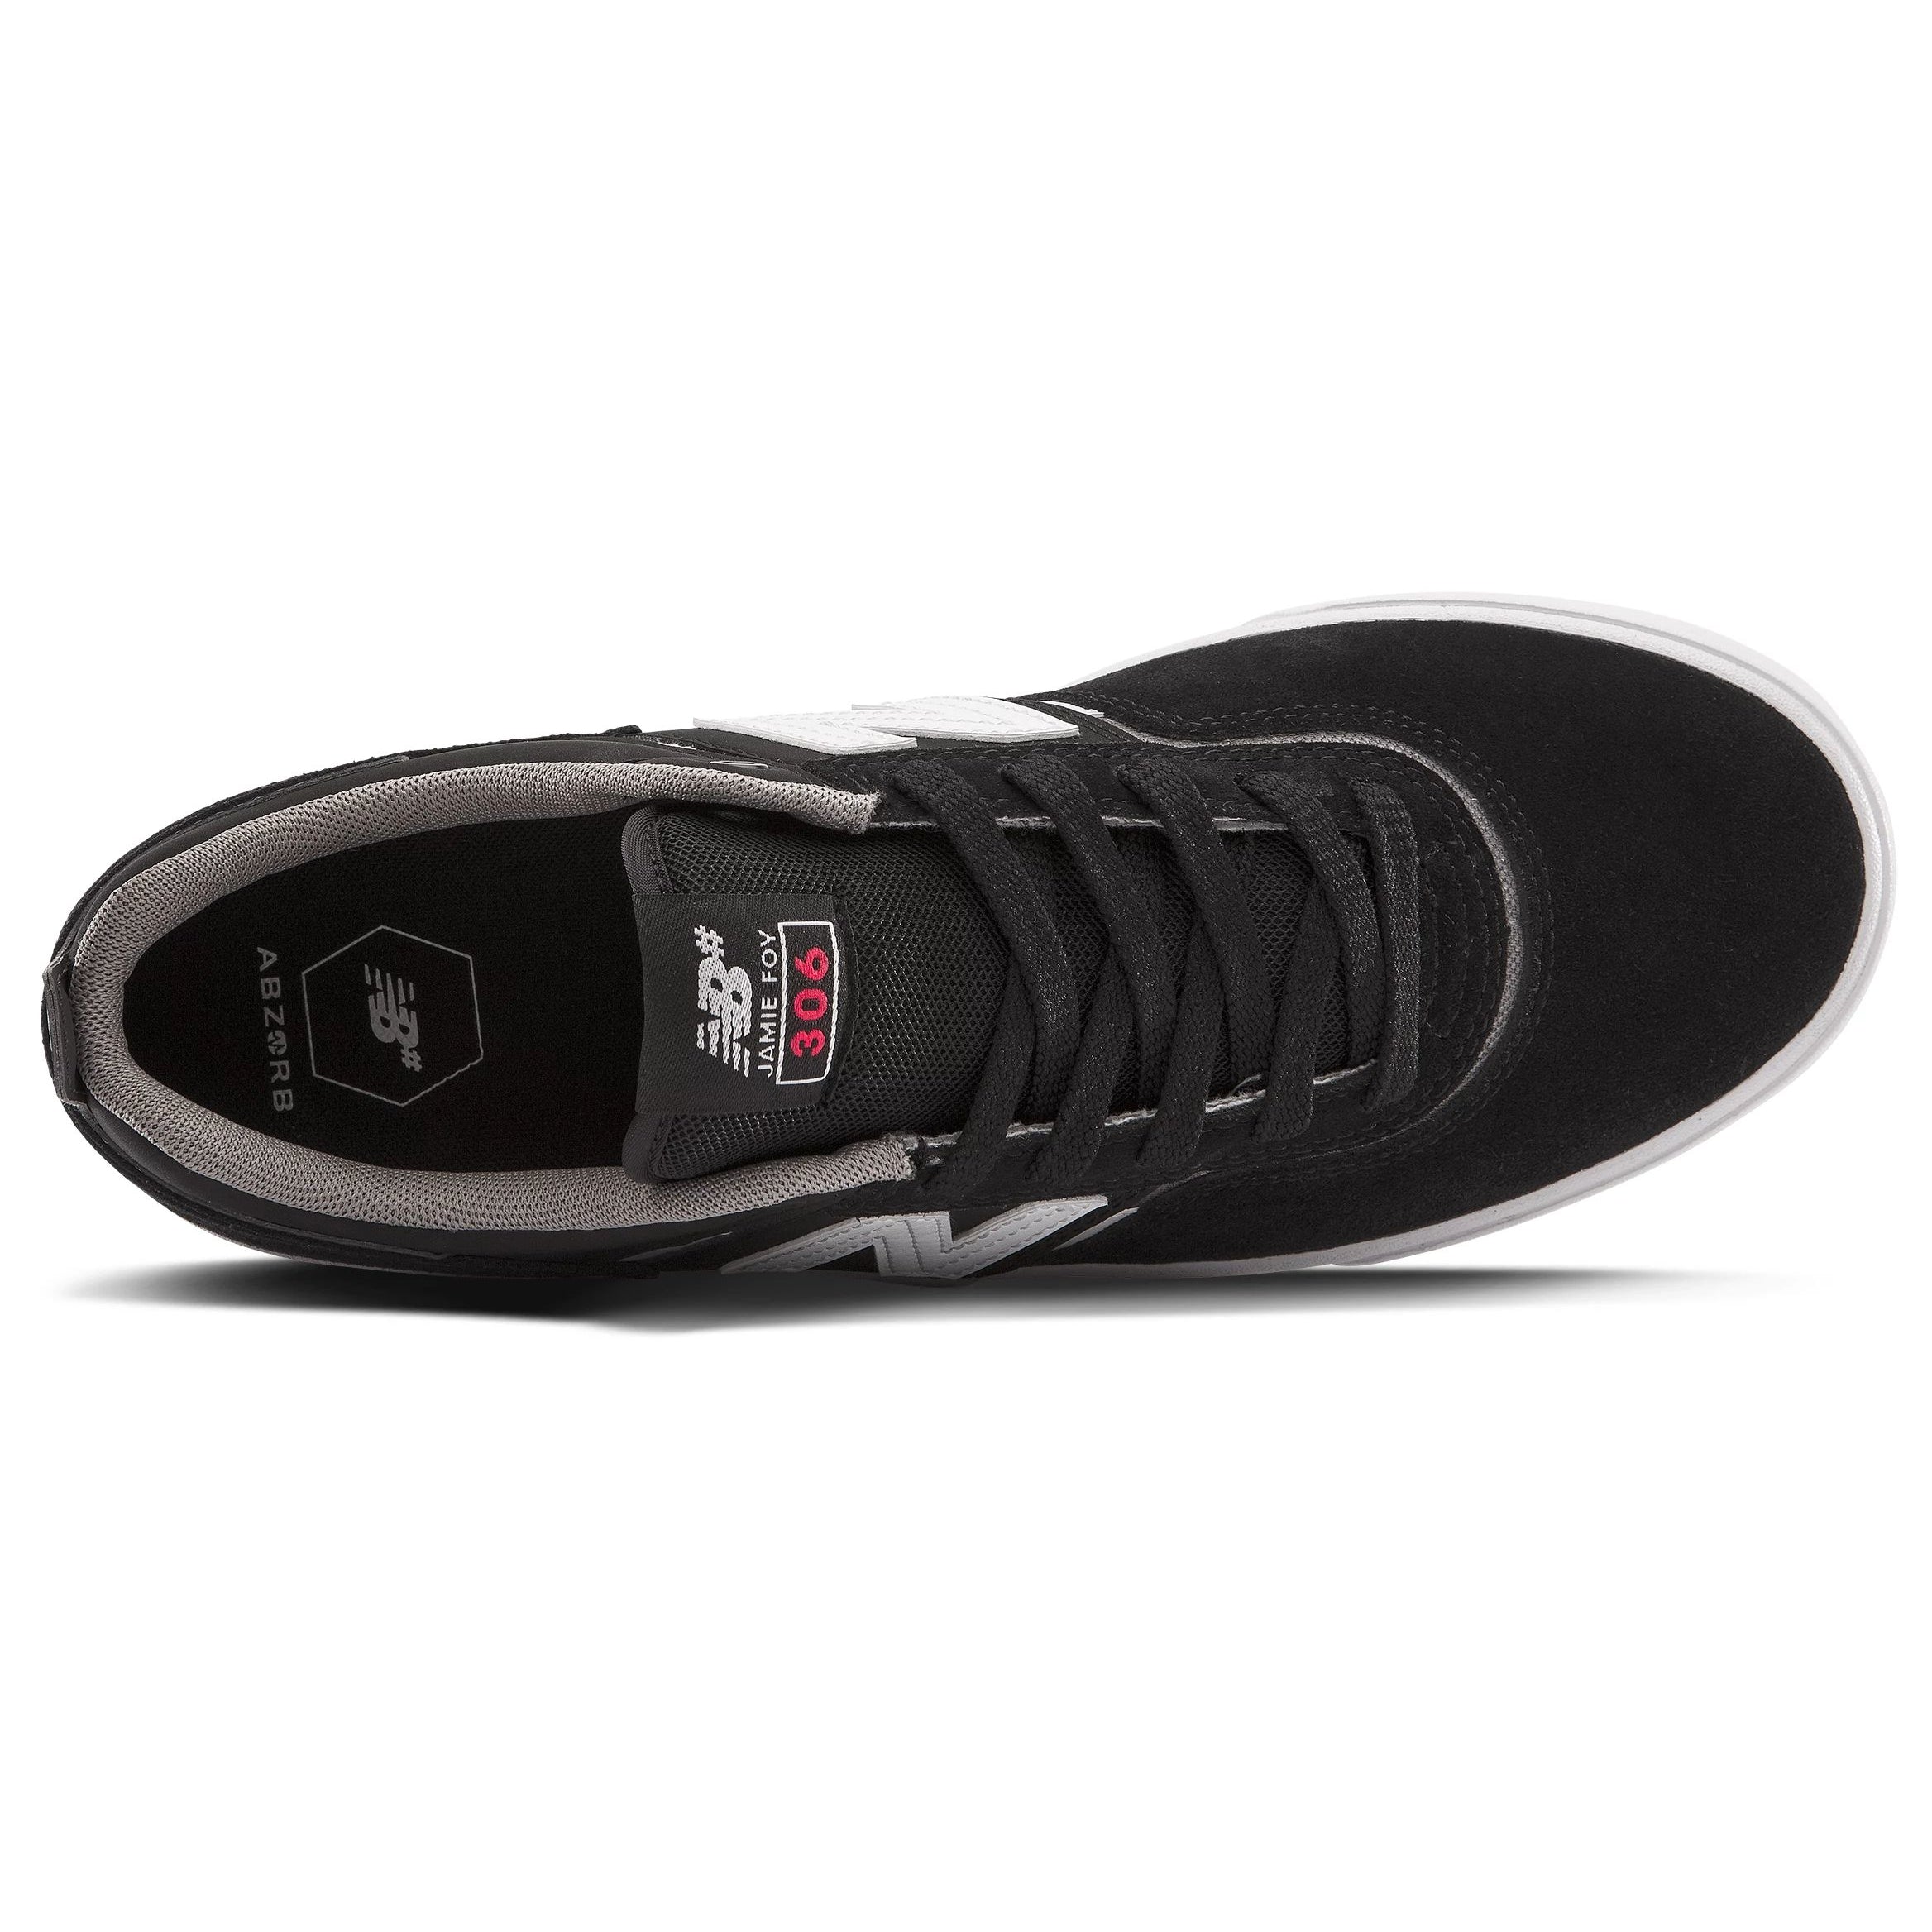 Black/White Jamie Foy NM306 NB Numeric Skateboard Shoe Top